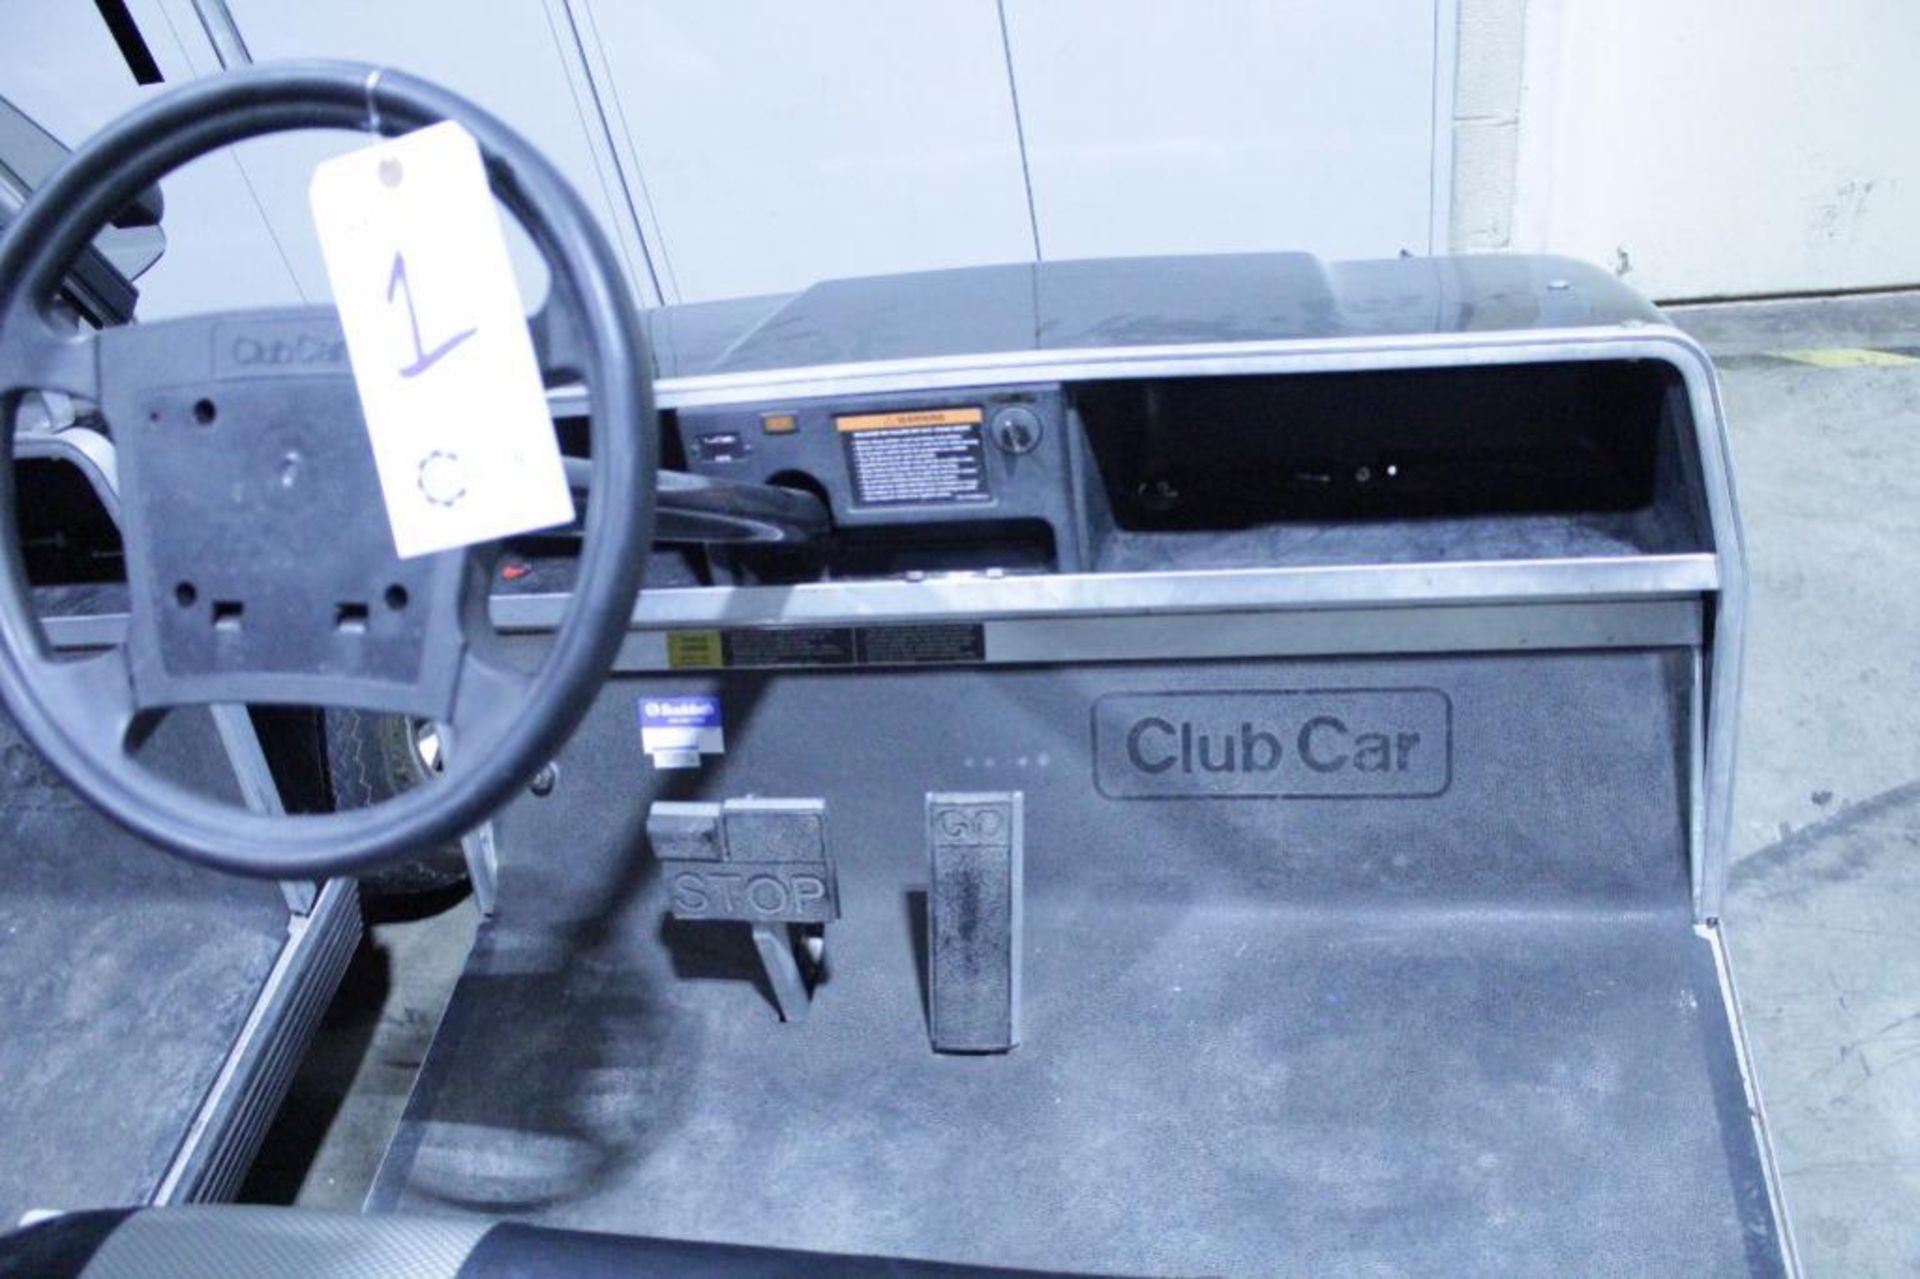 Club Car 6 seat golf cart - Image 4 of 6